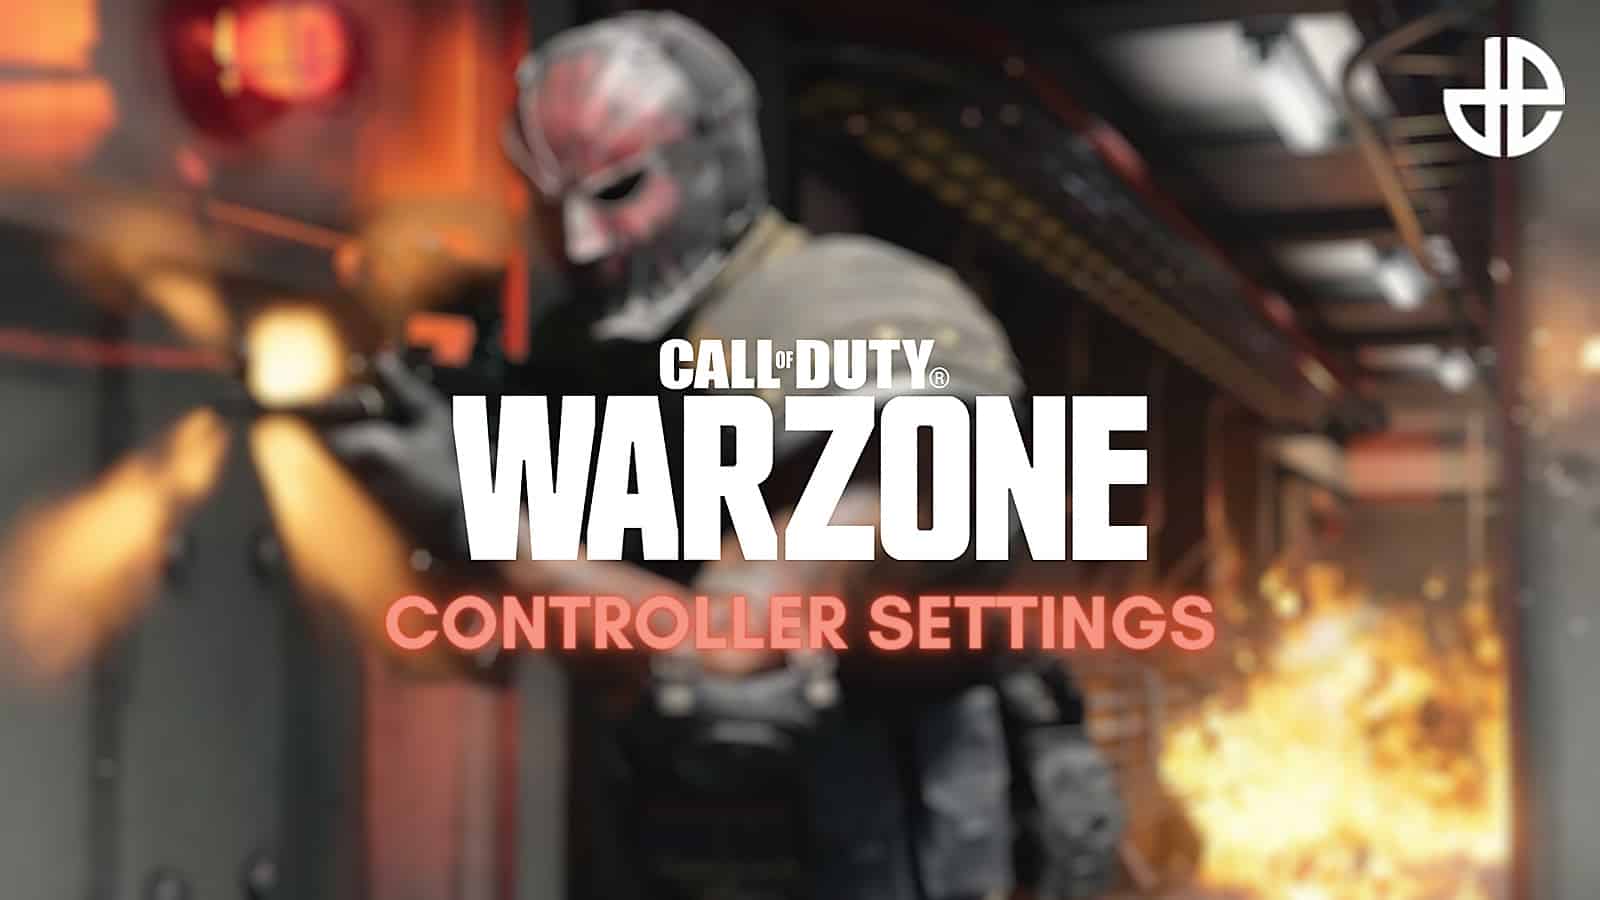 Warzone controller settings